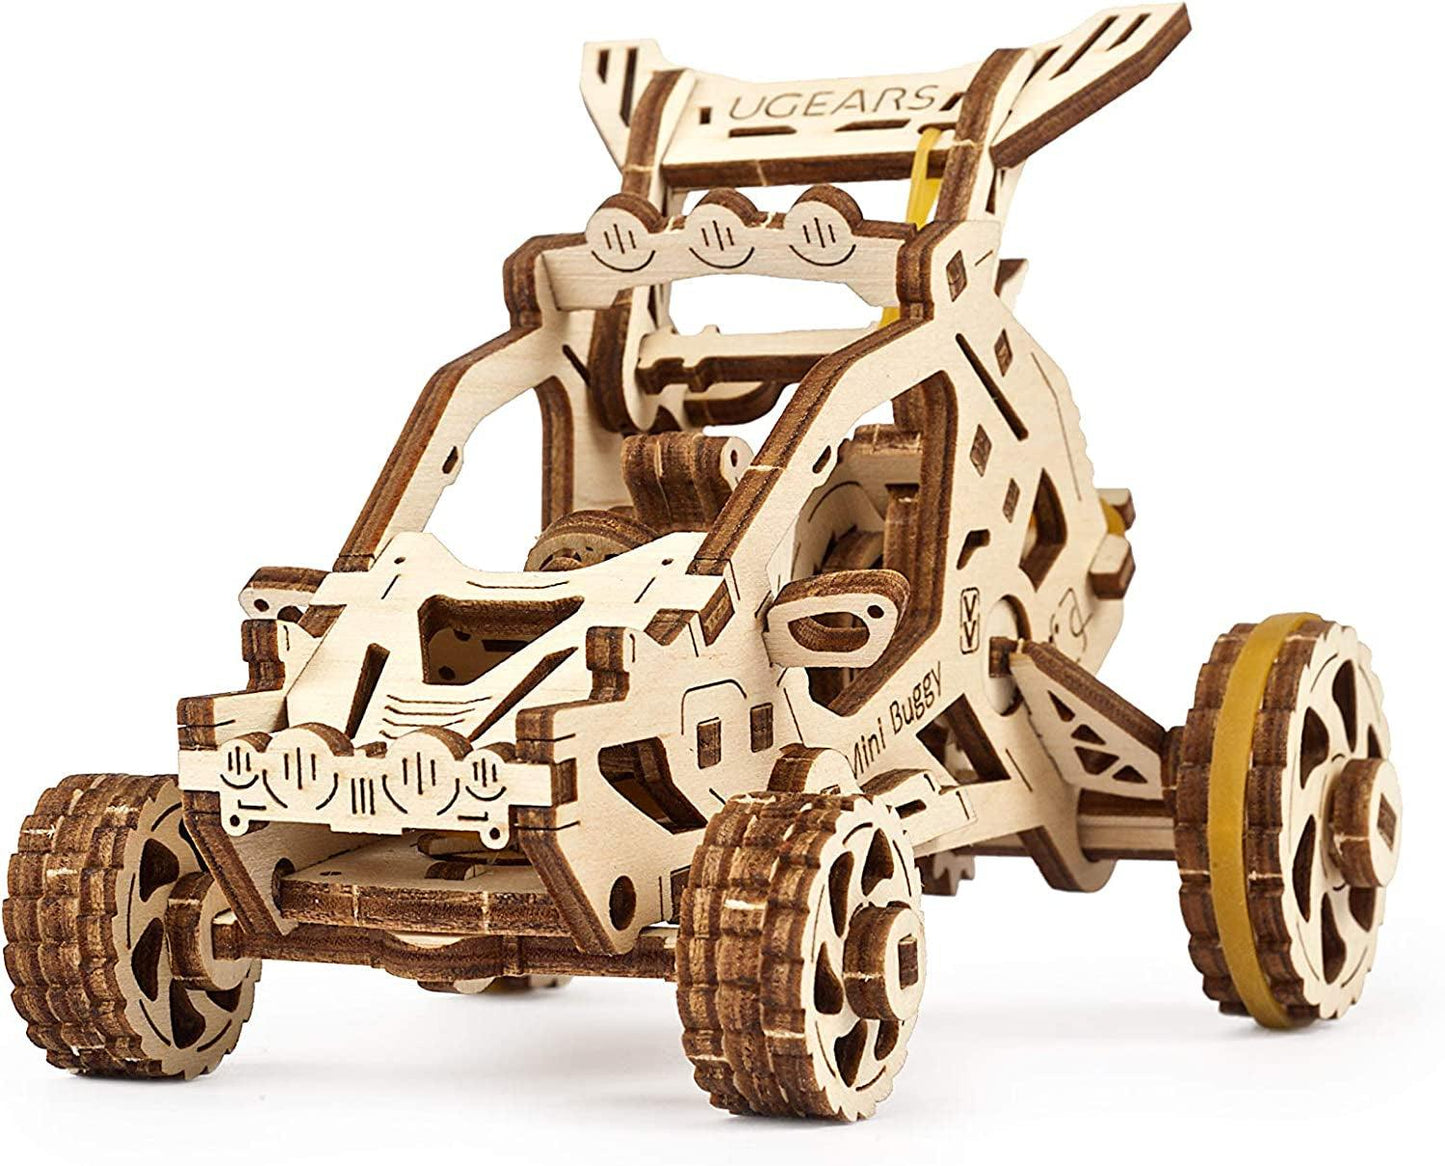 Mini Buggy 3D Puzzle Small Motor Vehicle Mechanical Model Kit Wooden Easy Self-Assembling - WoodArtSupply